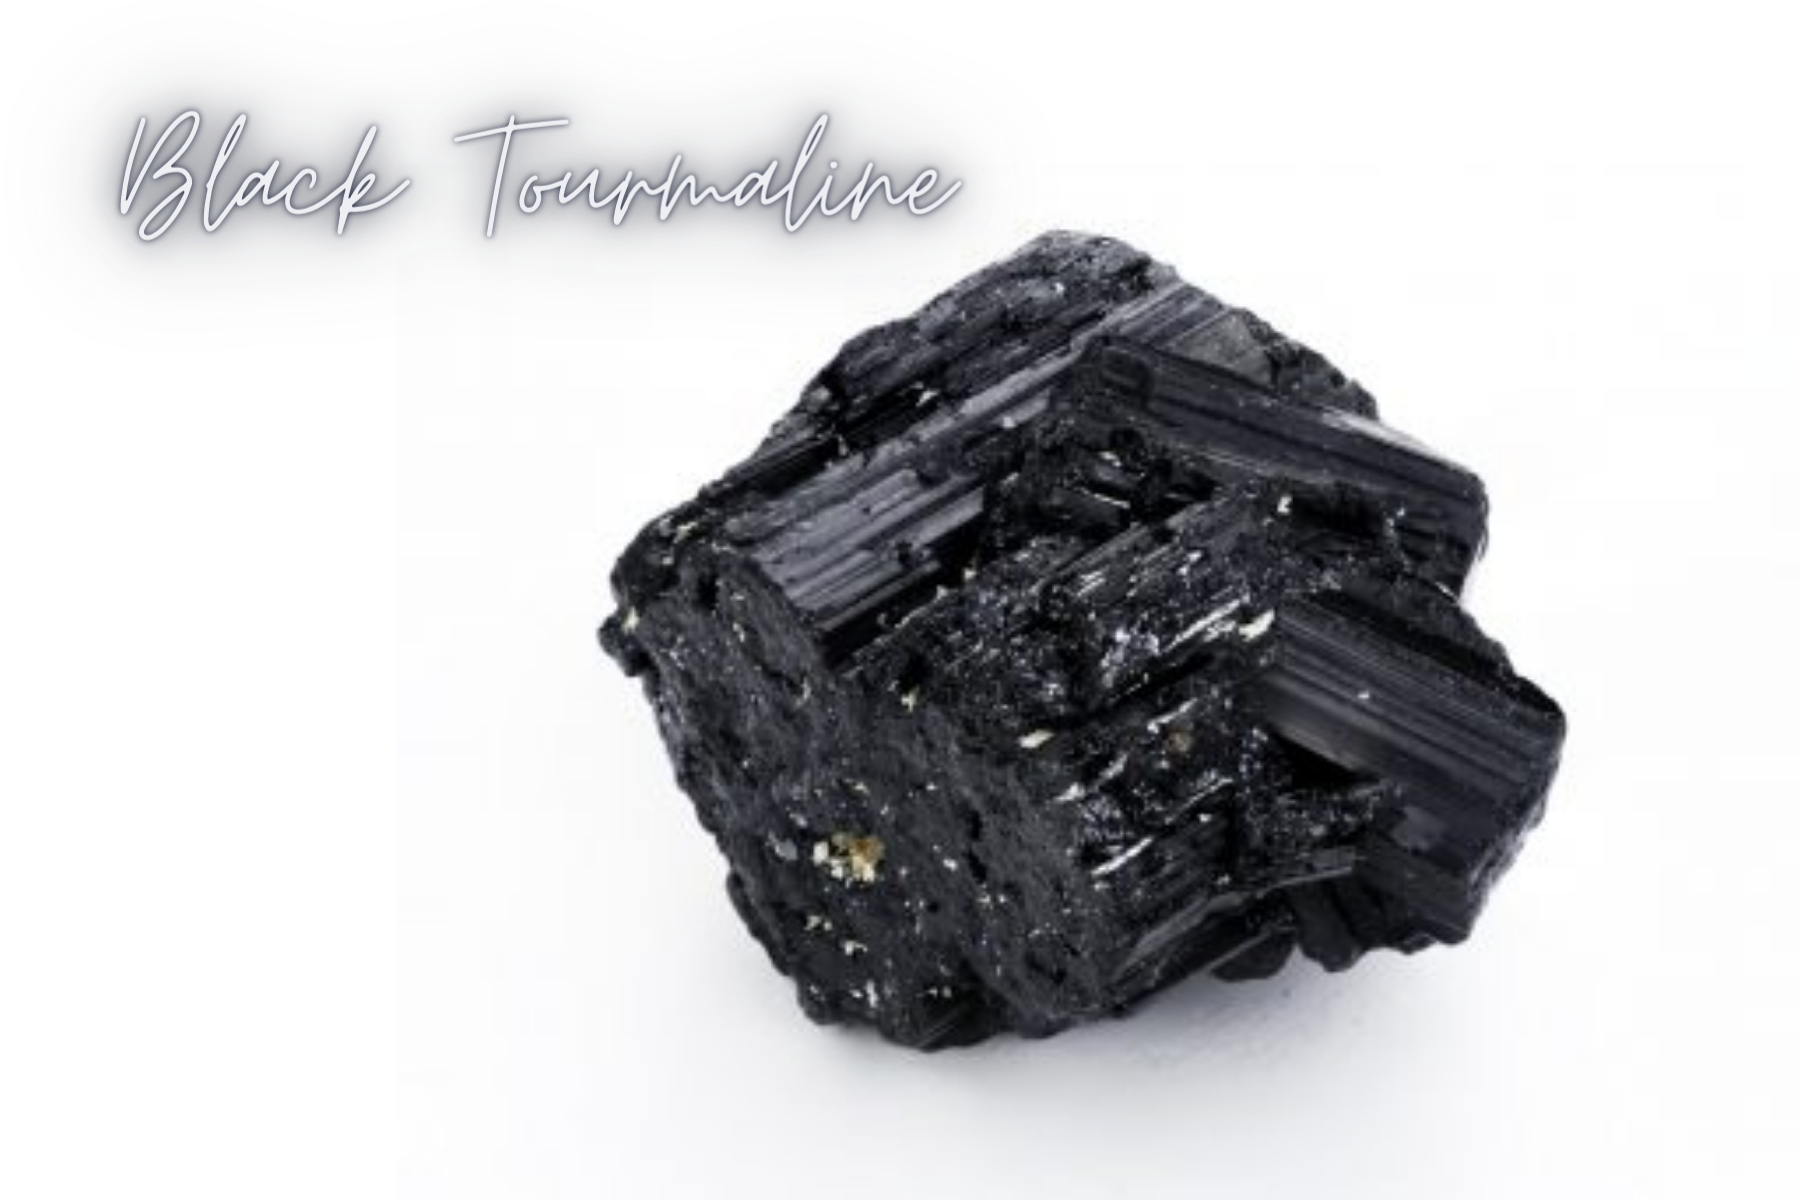 A black tourmaline crystal resembling charcoal